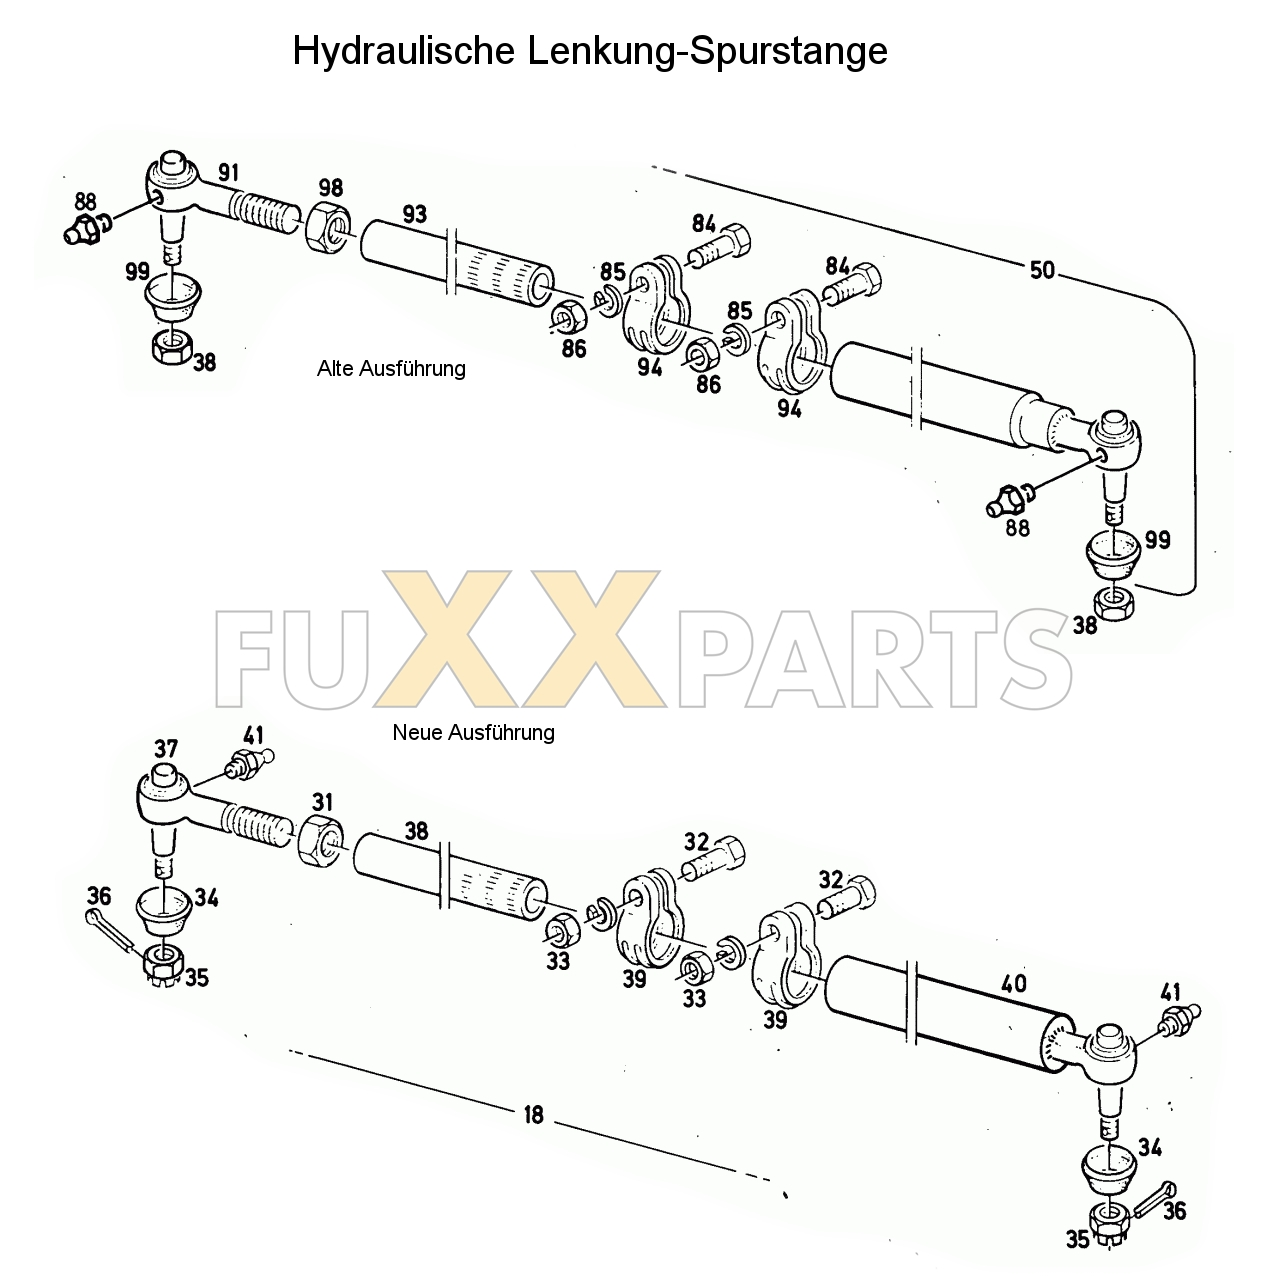 D 6206 Hydraulische Lenkung-Spurstange